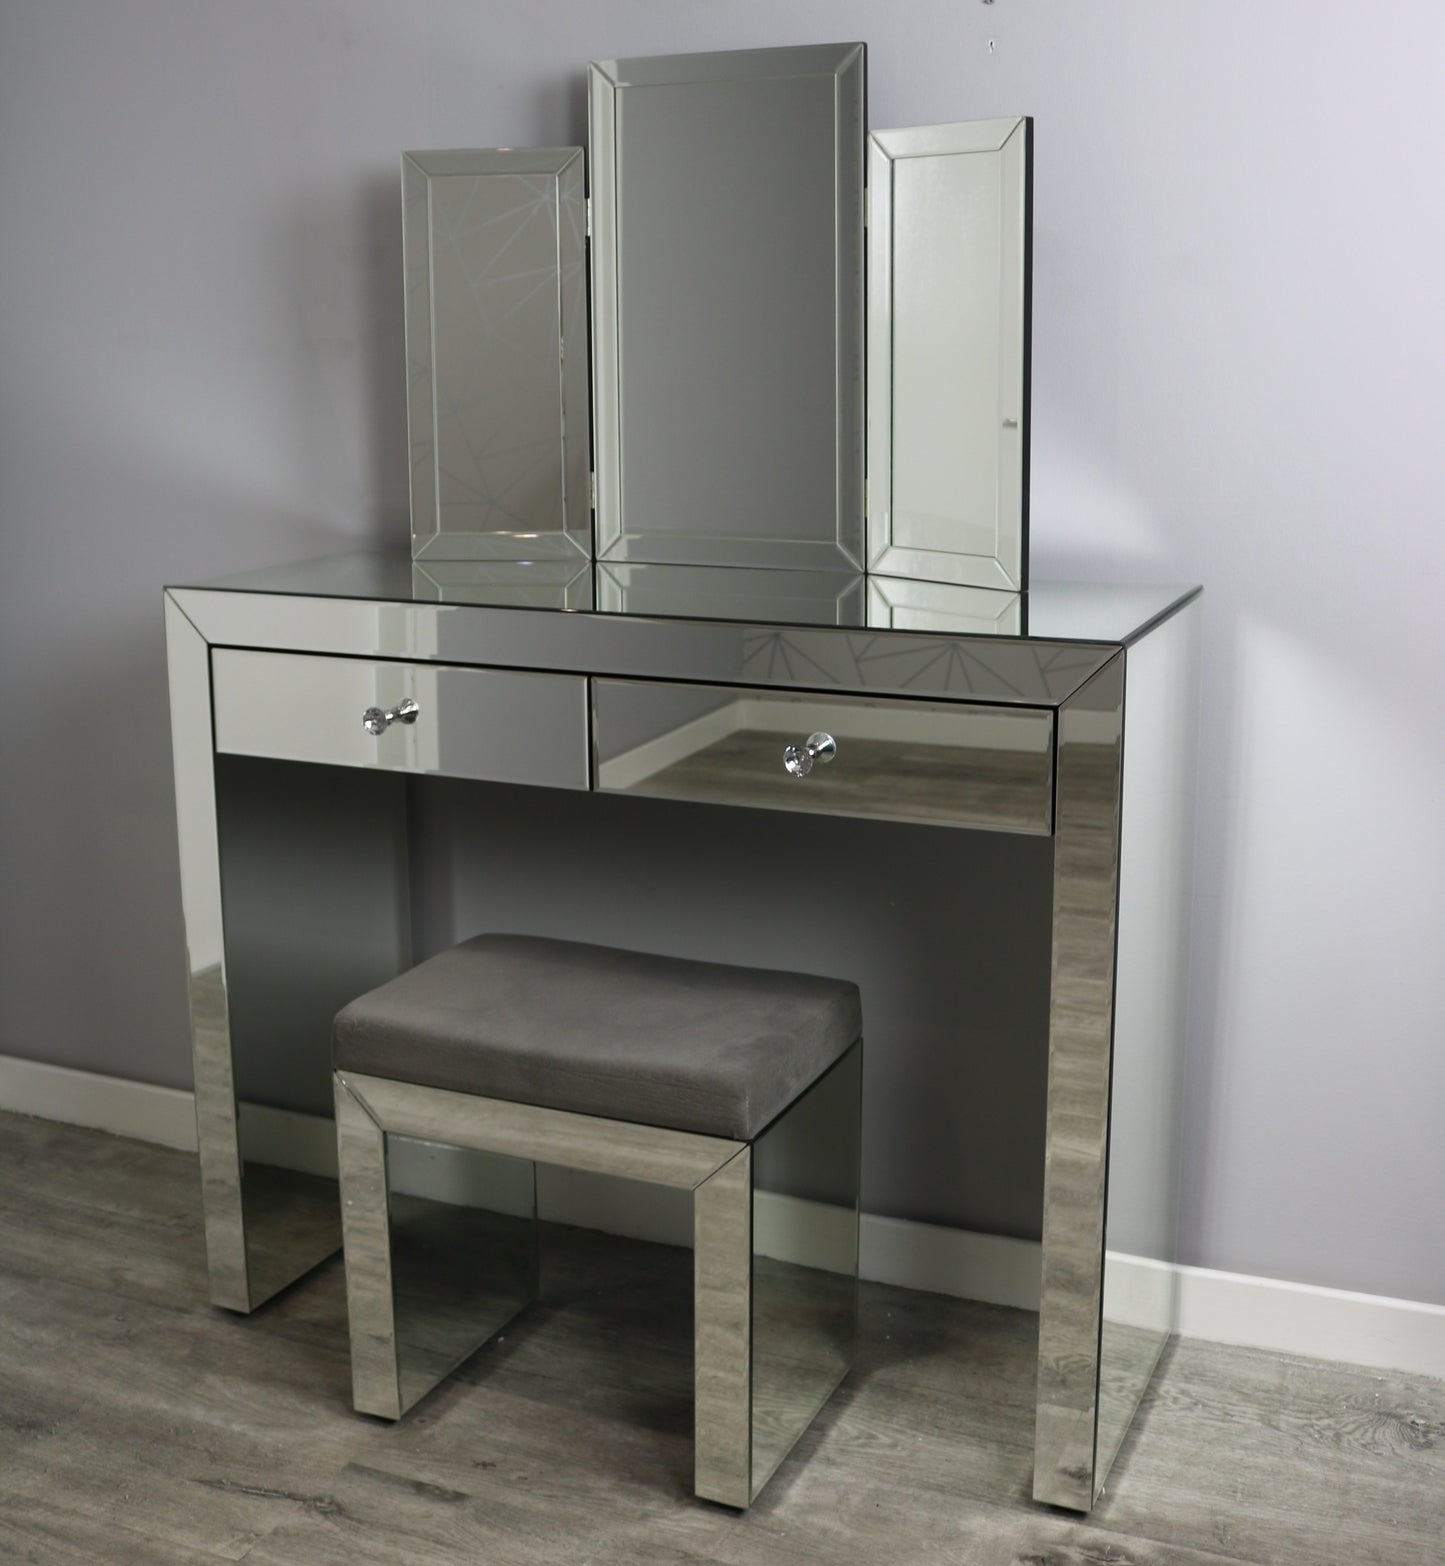 2 Drawer Mirrored Dressing Table Set